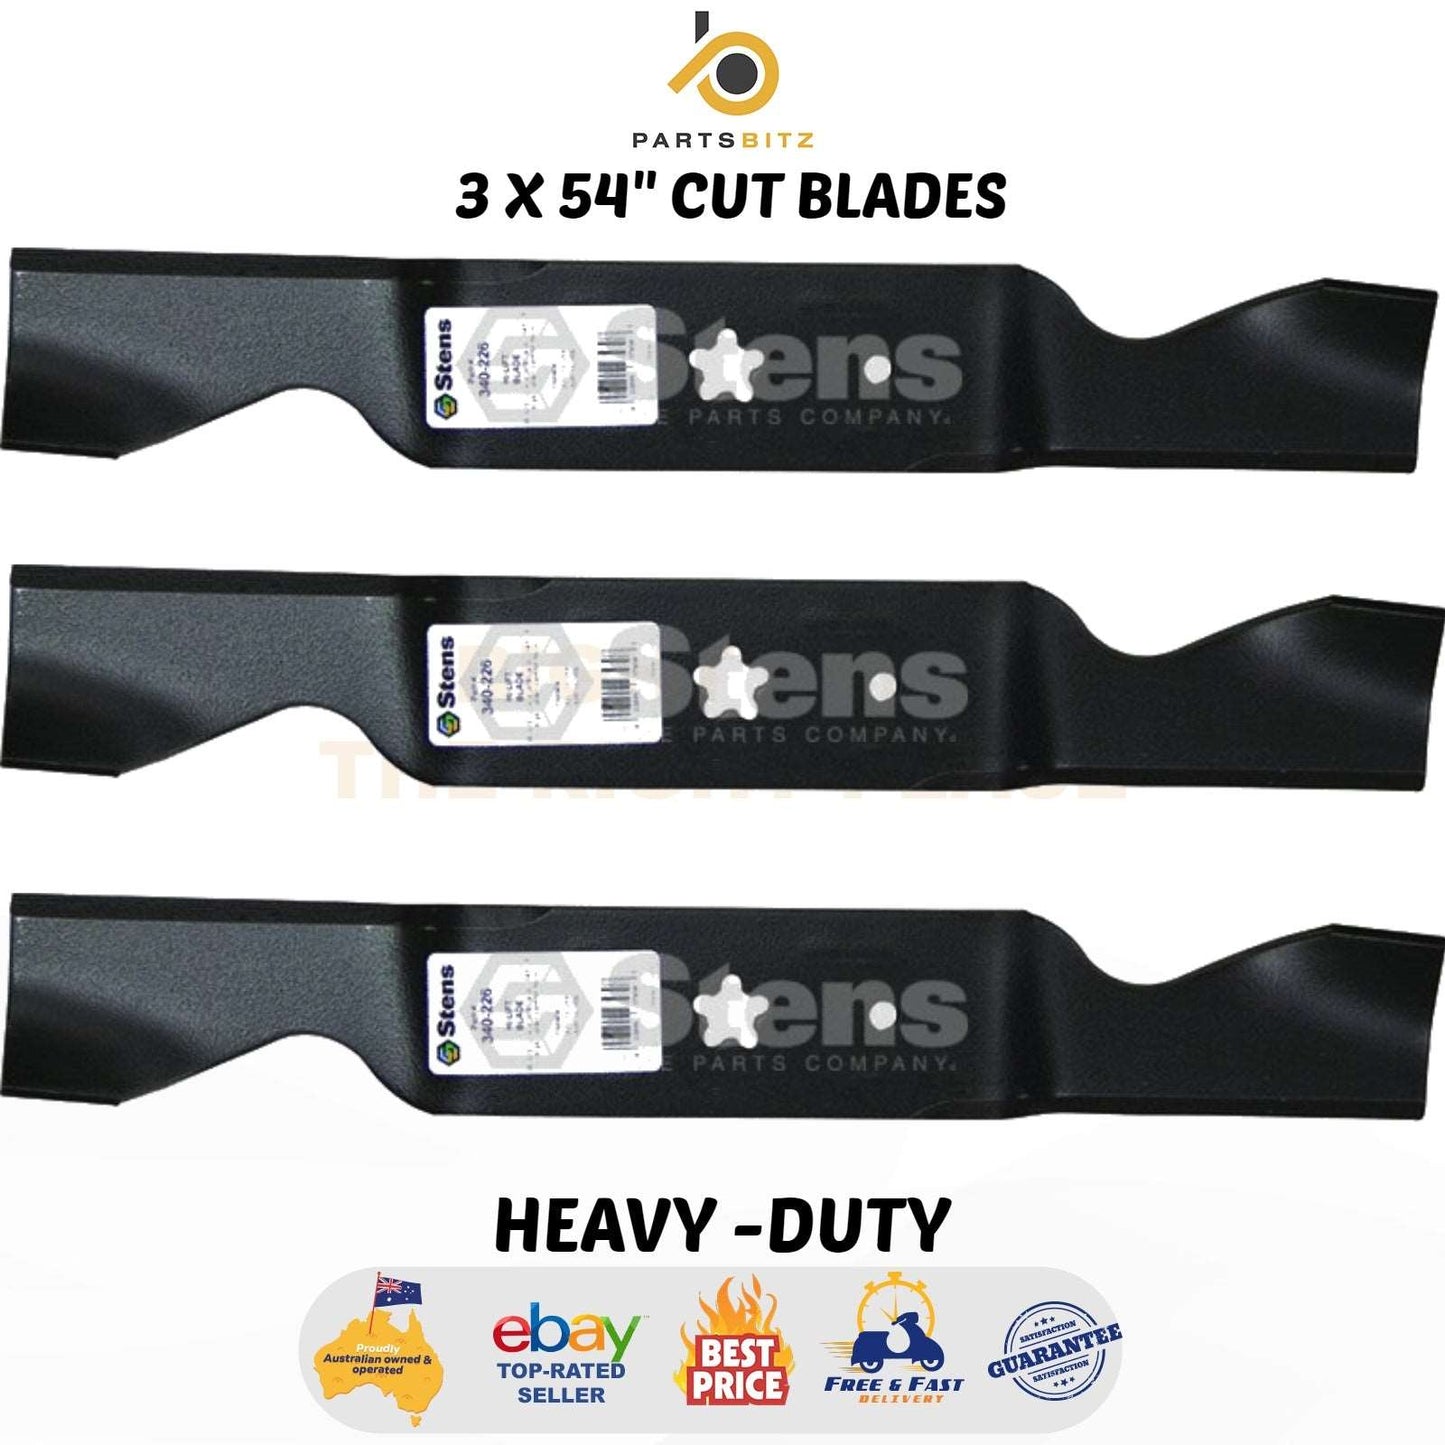 3 X 54" Cut Blades for Husqvarna Craftsman & Poulan Ride on Mowers 532 18 72 56